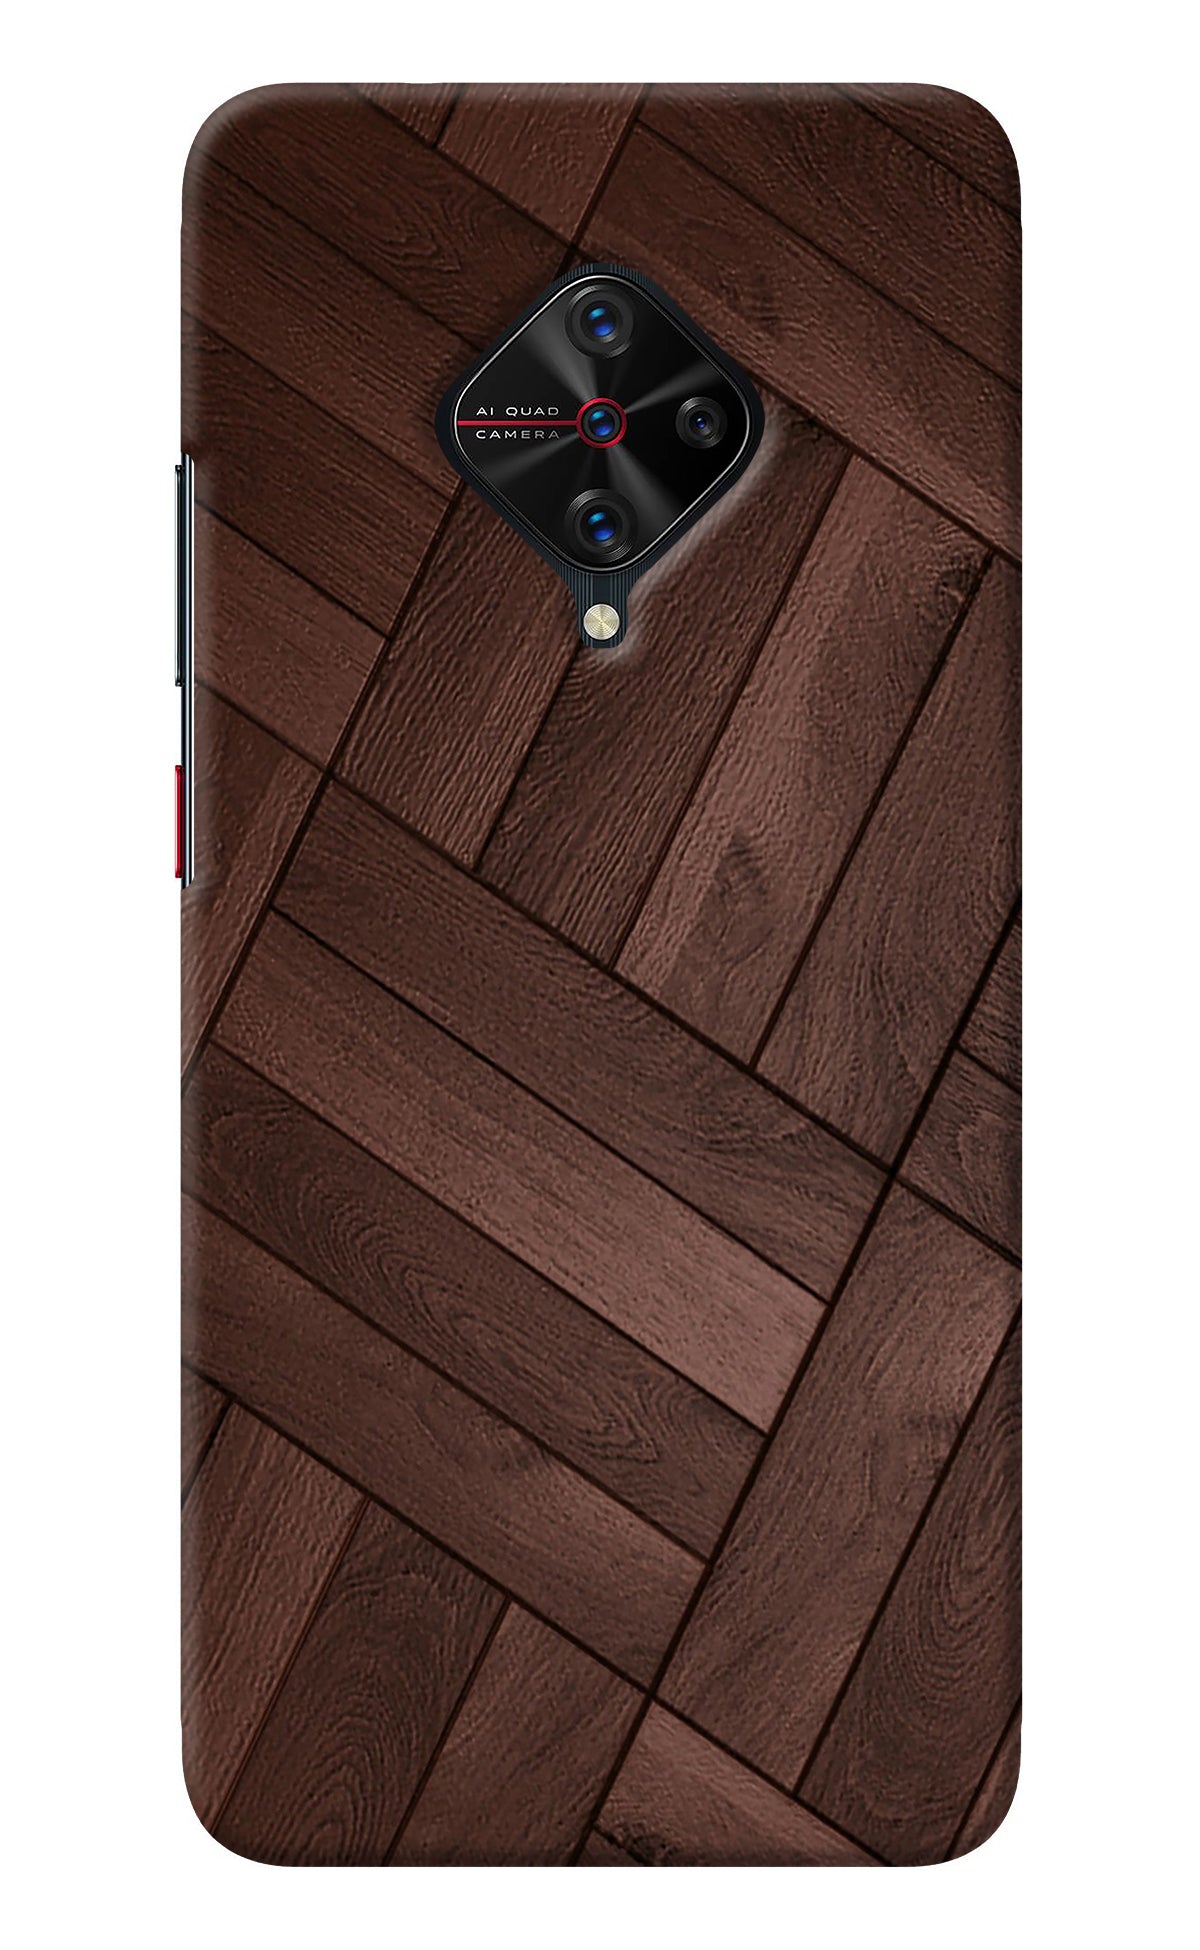 Wooden Texture Design Vivo S1 Pro Back Cover